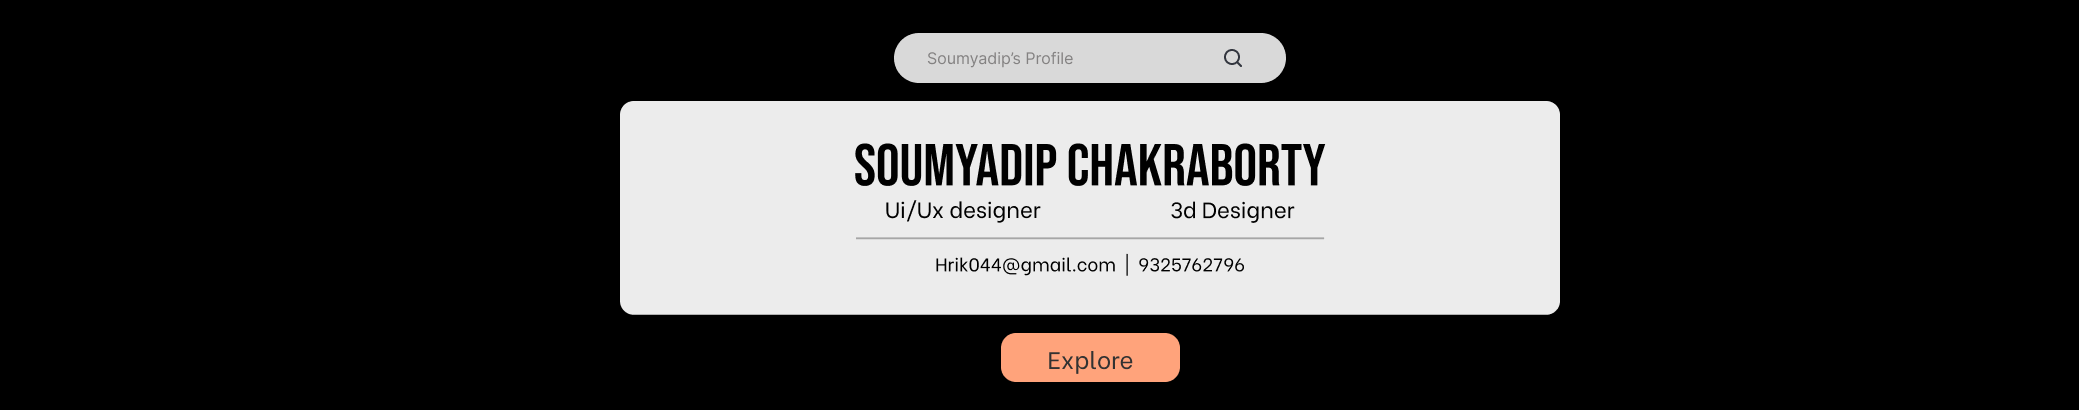 Soumyadip Chakraborty 的个人资料横幅